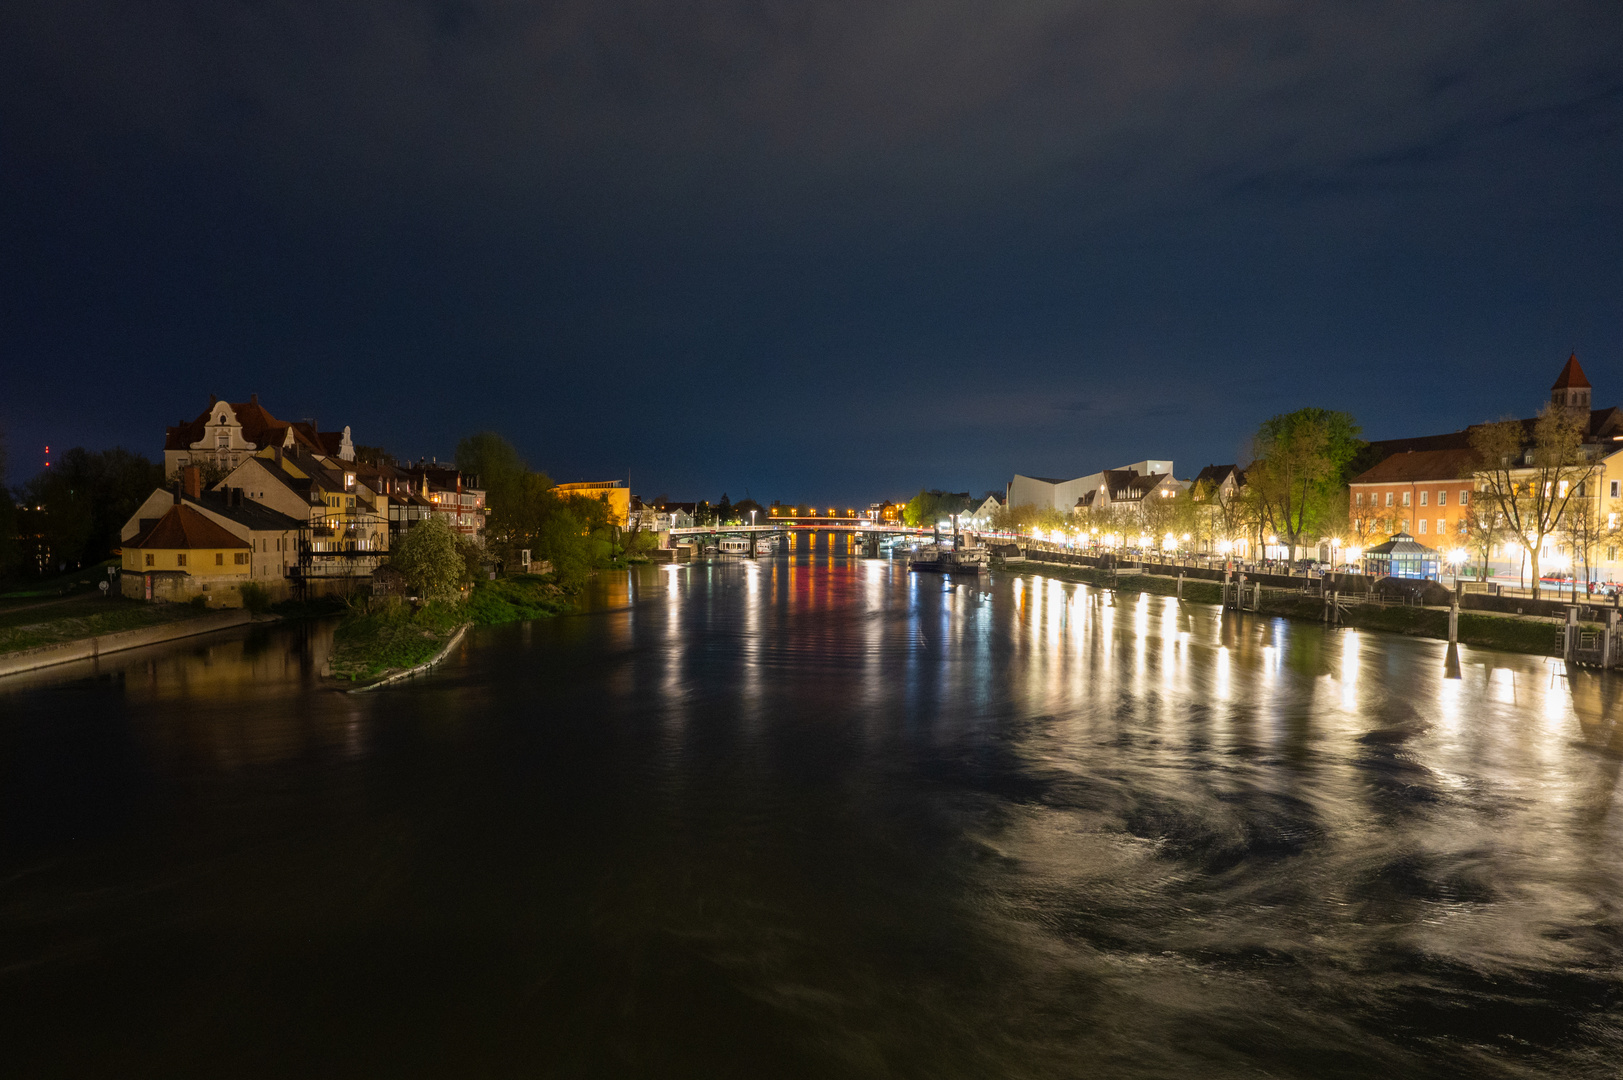 Regensburg by night - III